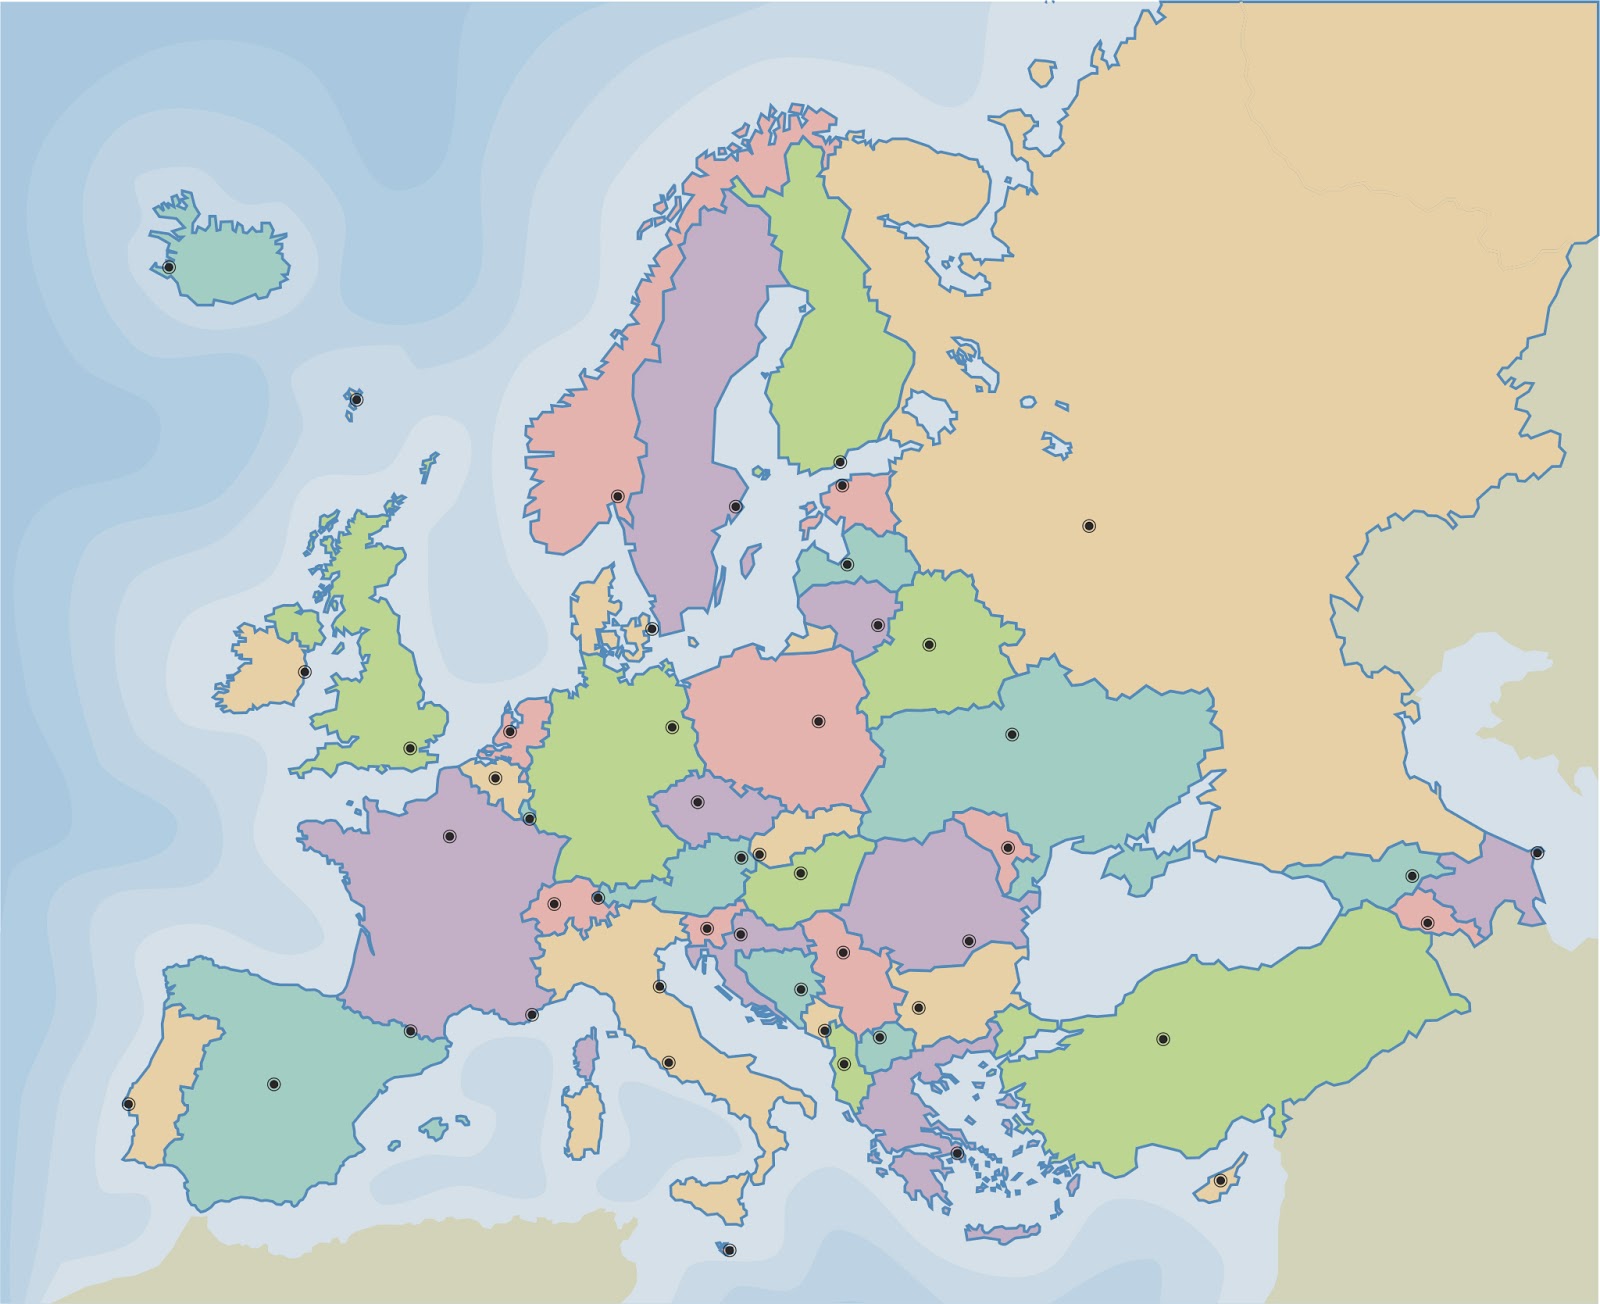 mapa de europa mudo político